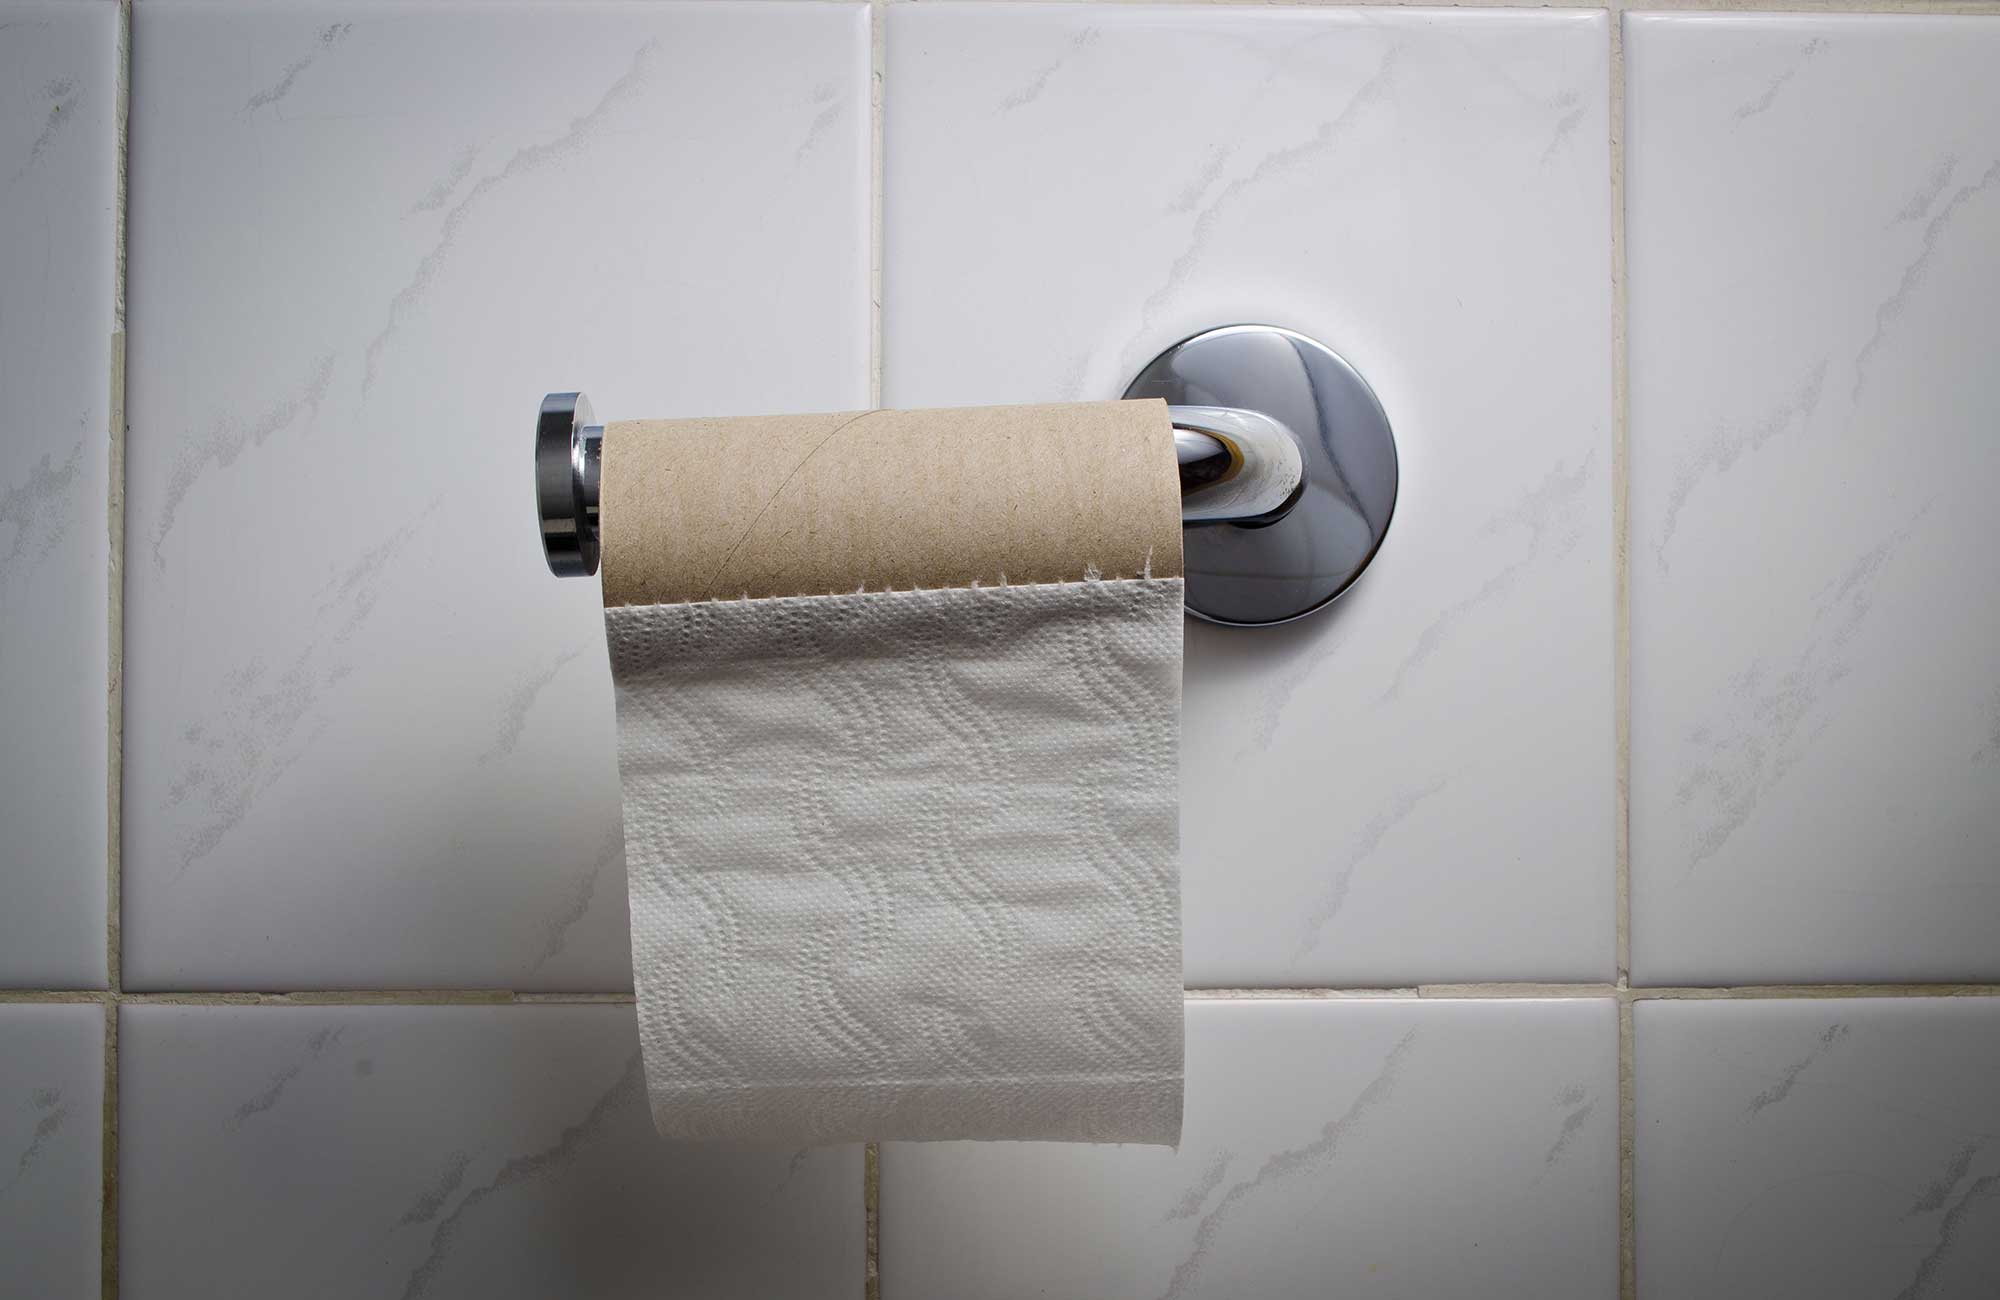 Slave used toilet paper clean